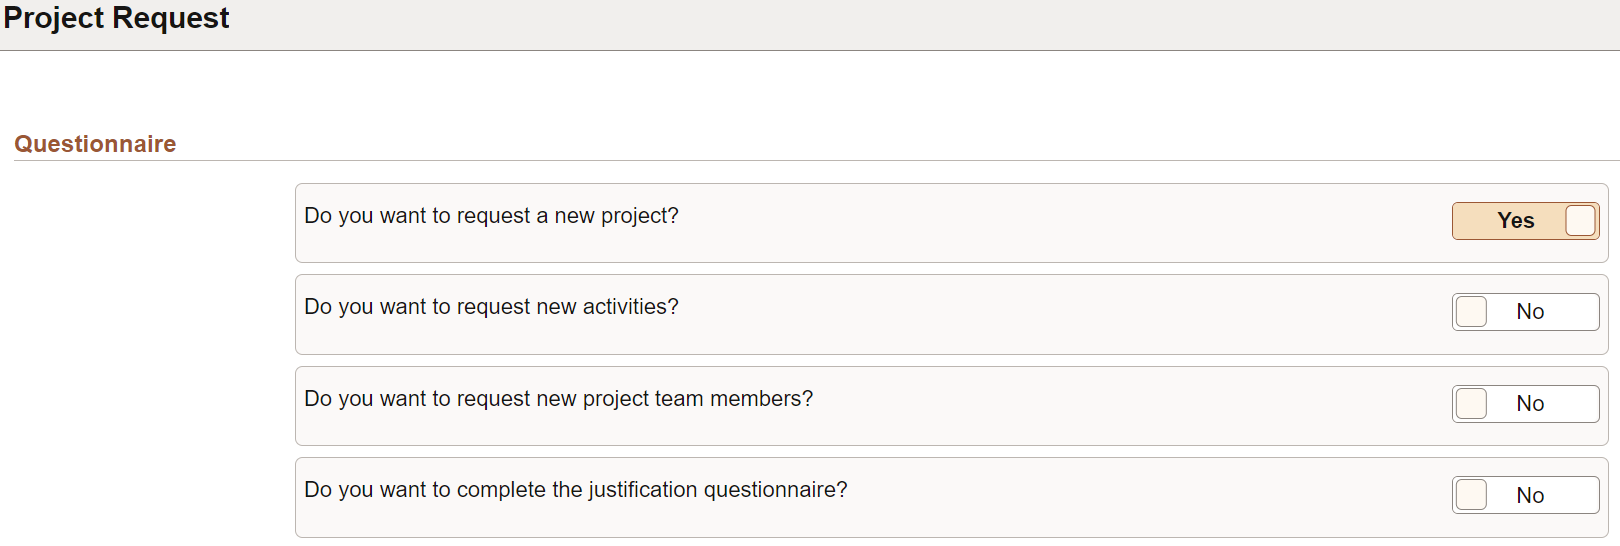 Project Request Questionnaire Page